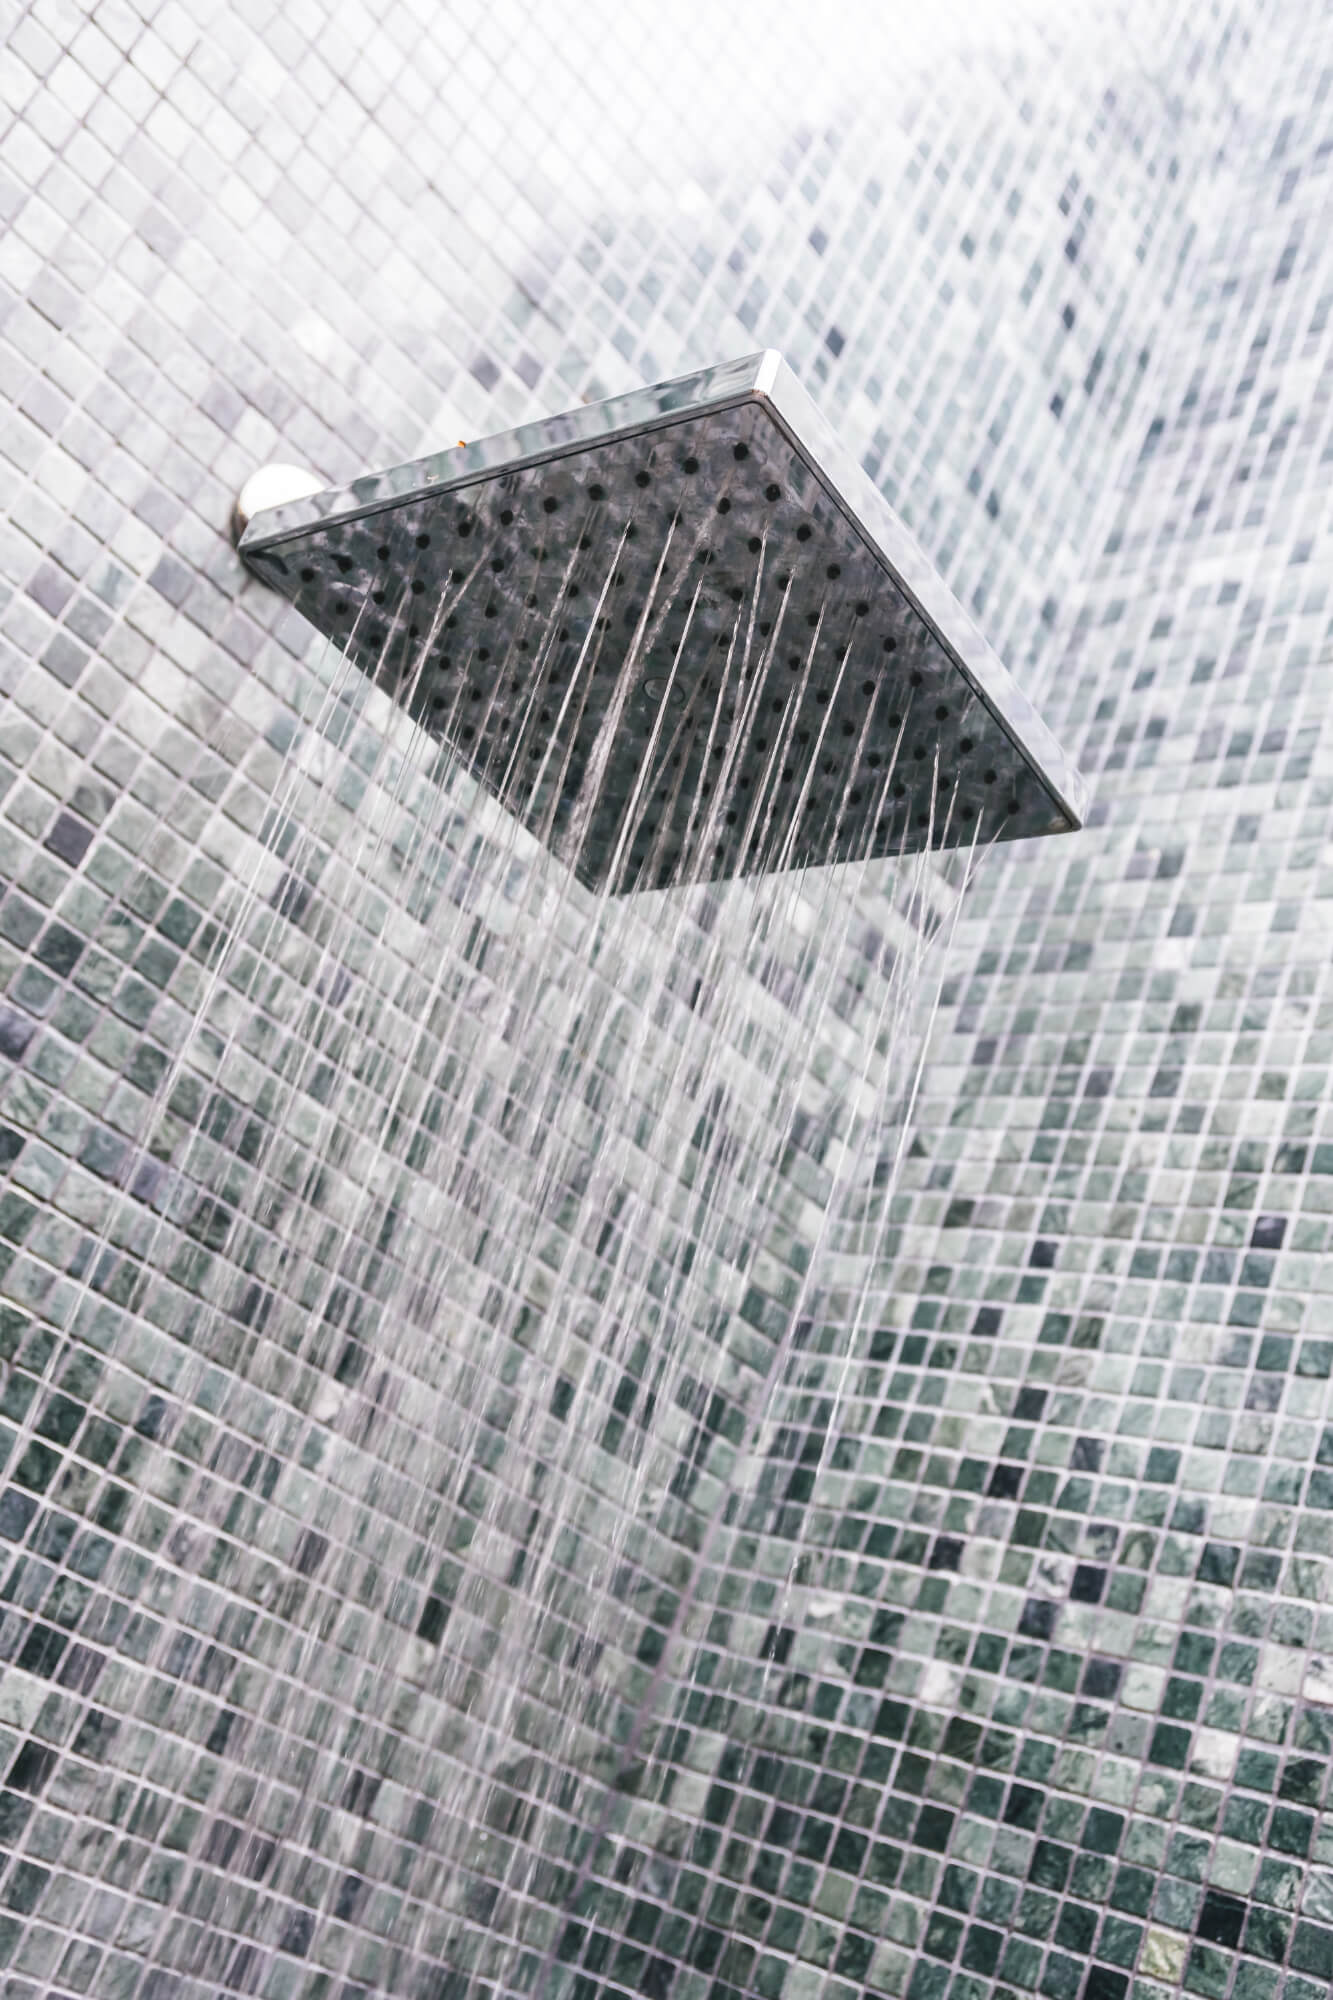 Shower Conversions - Carolina Bathroom Remodeling Pros of Myrtle Beach